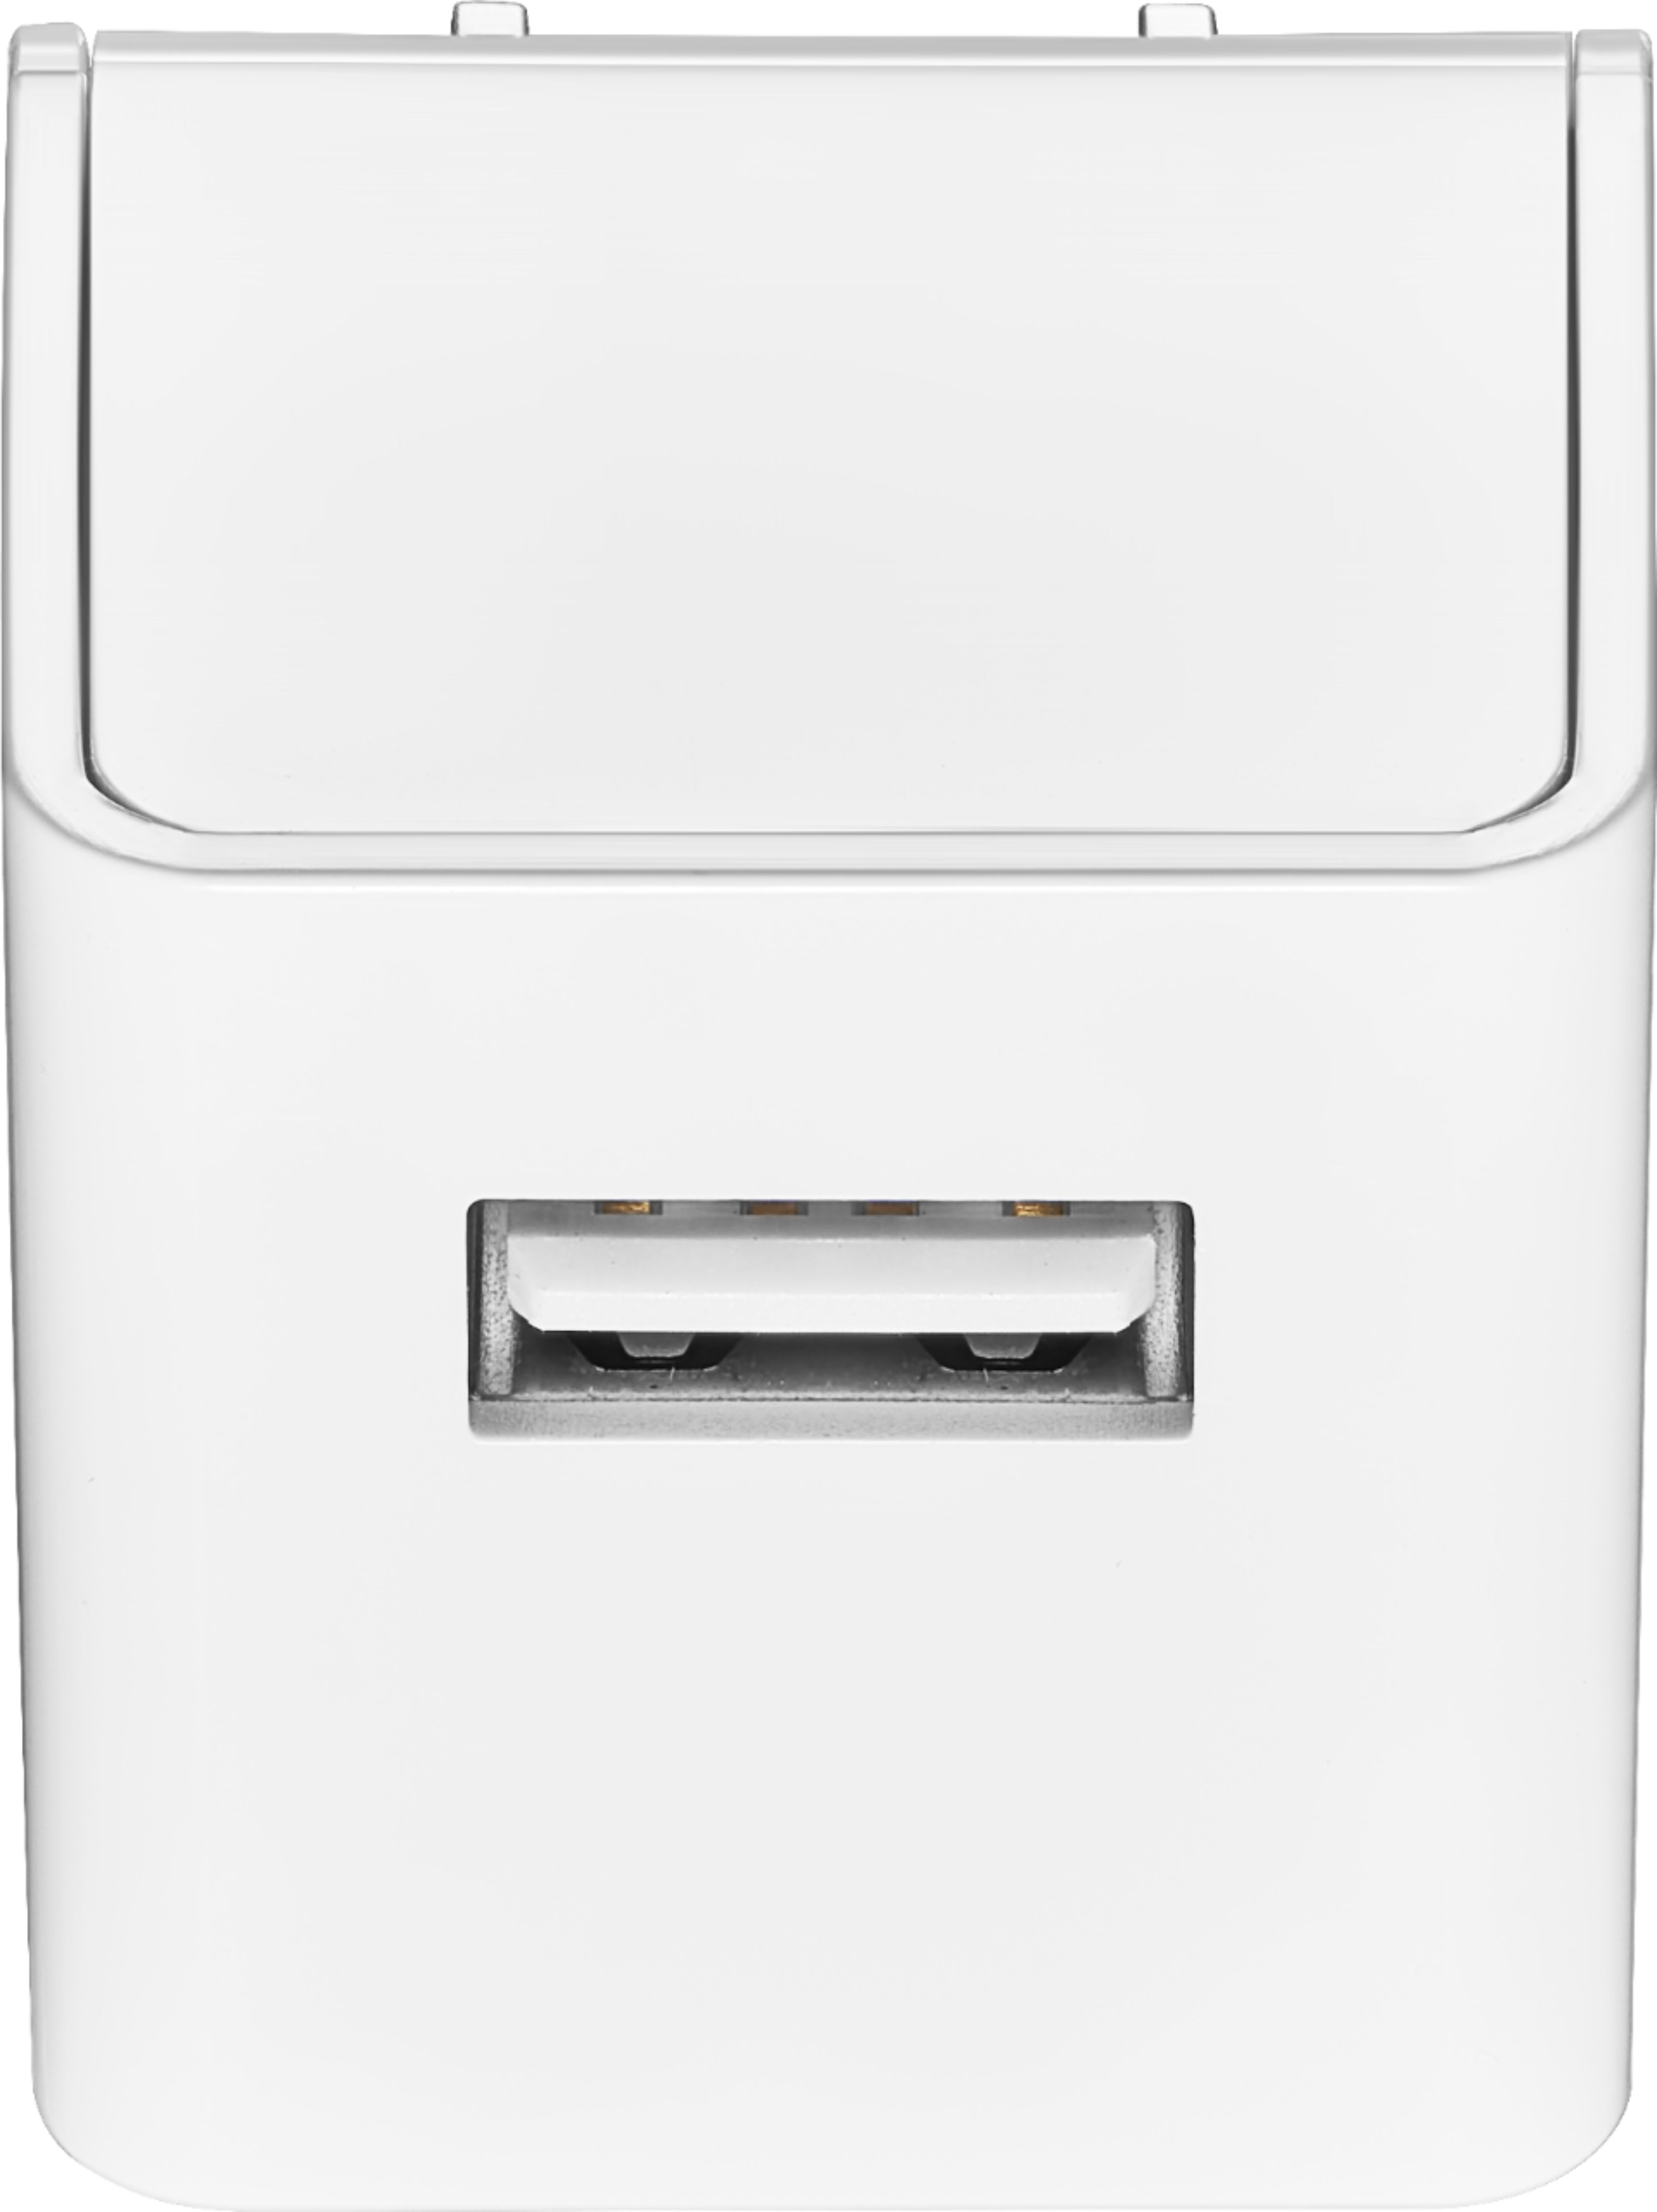 Dynex™ - 5 W USB Wall Charger - White